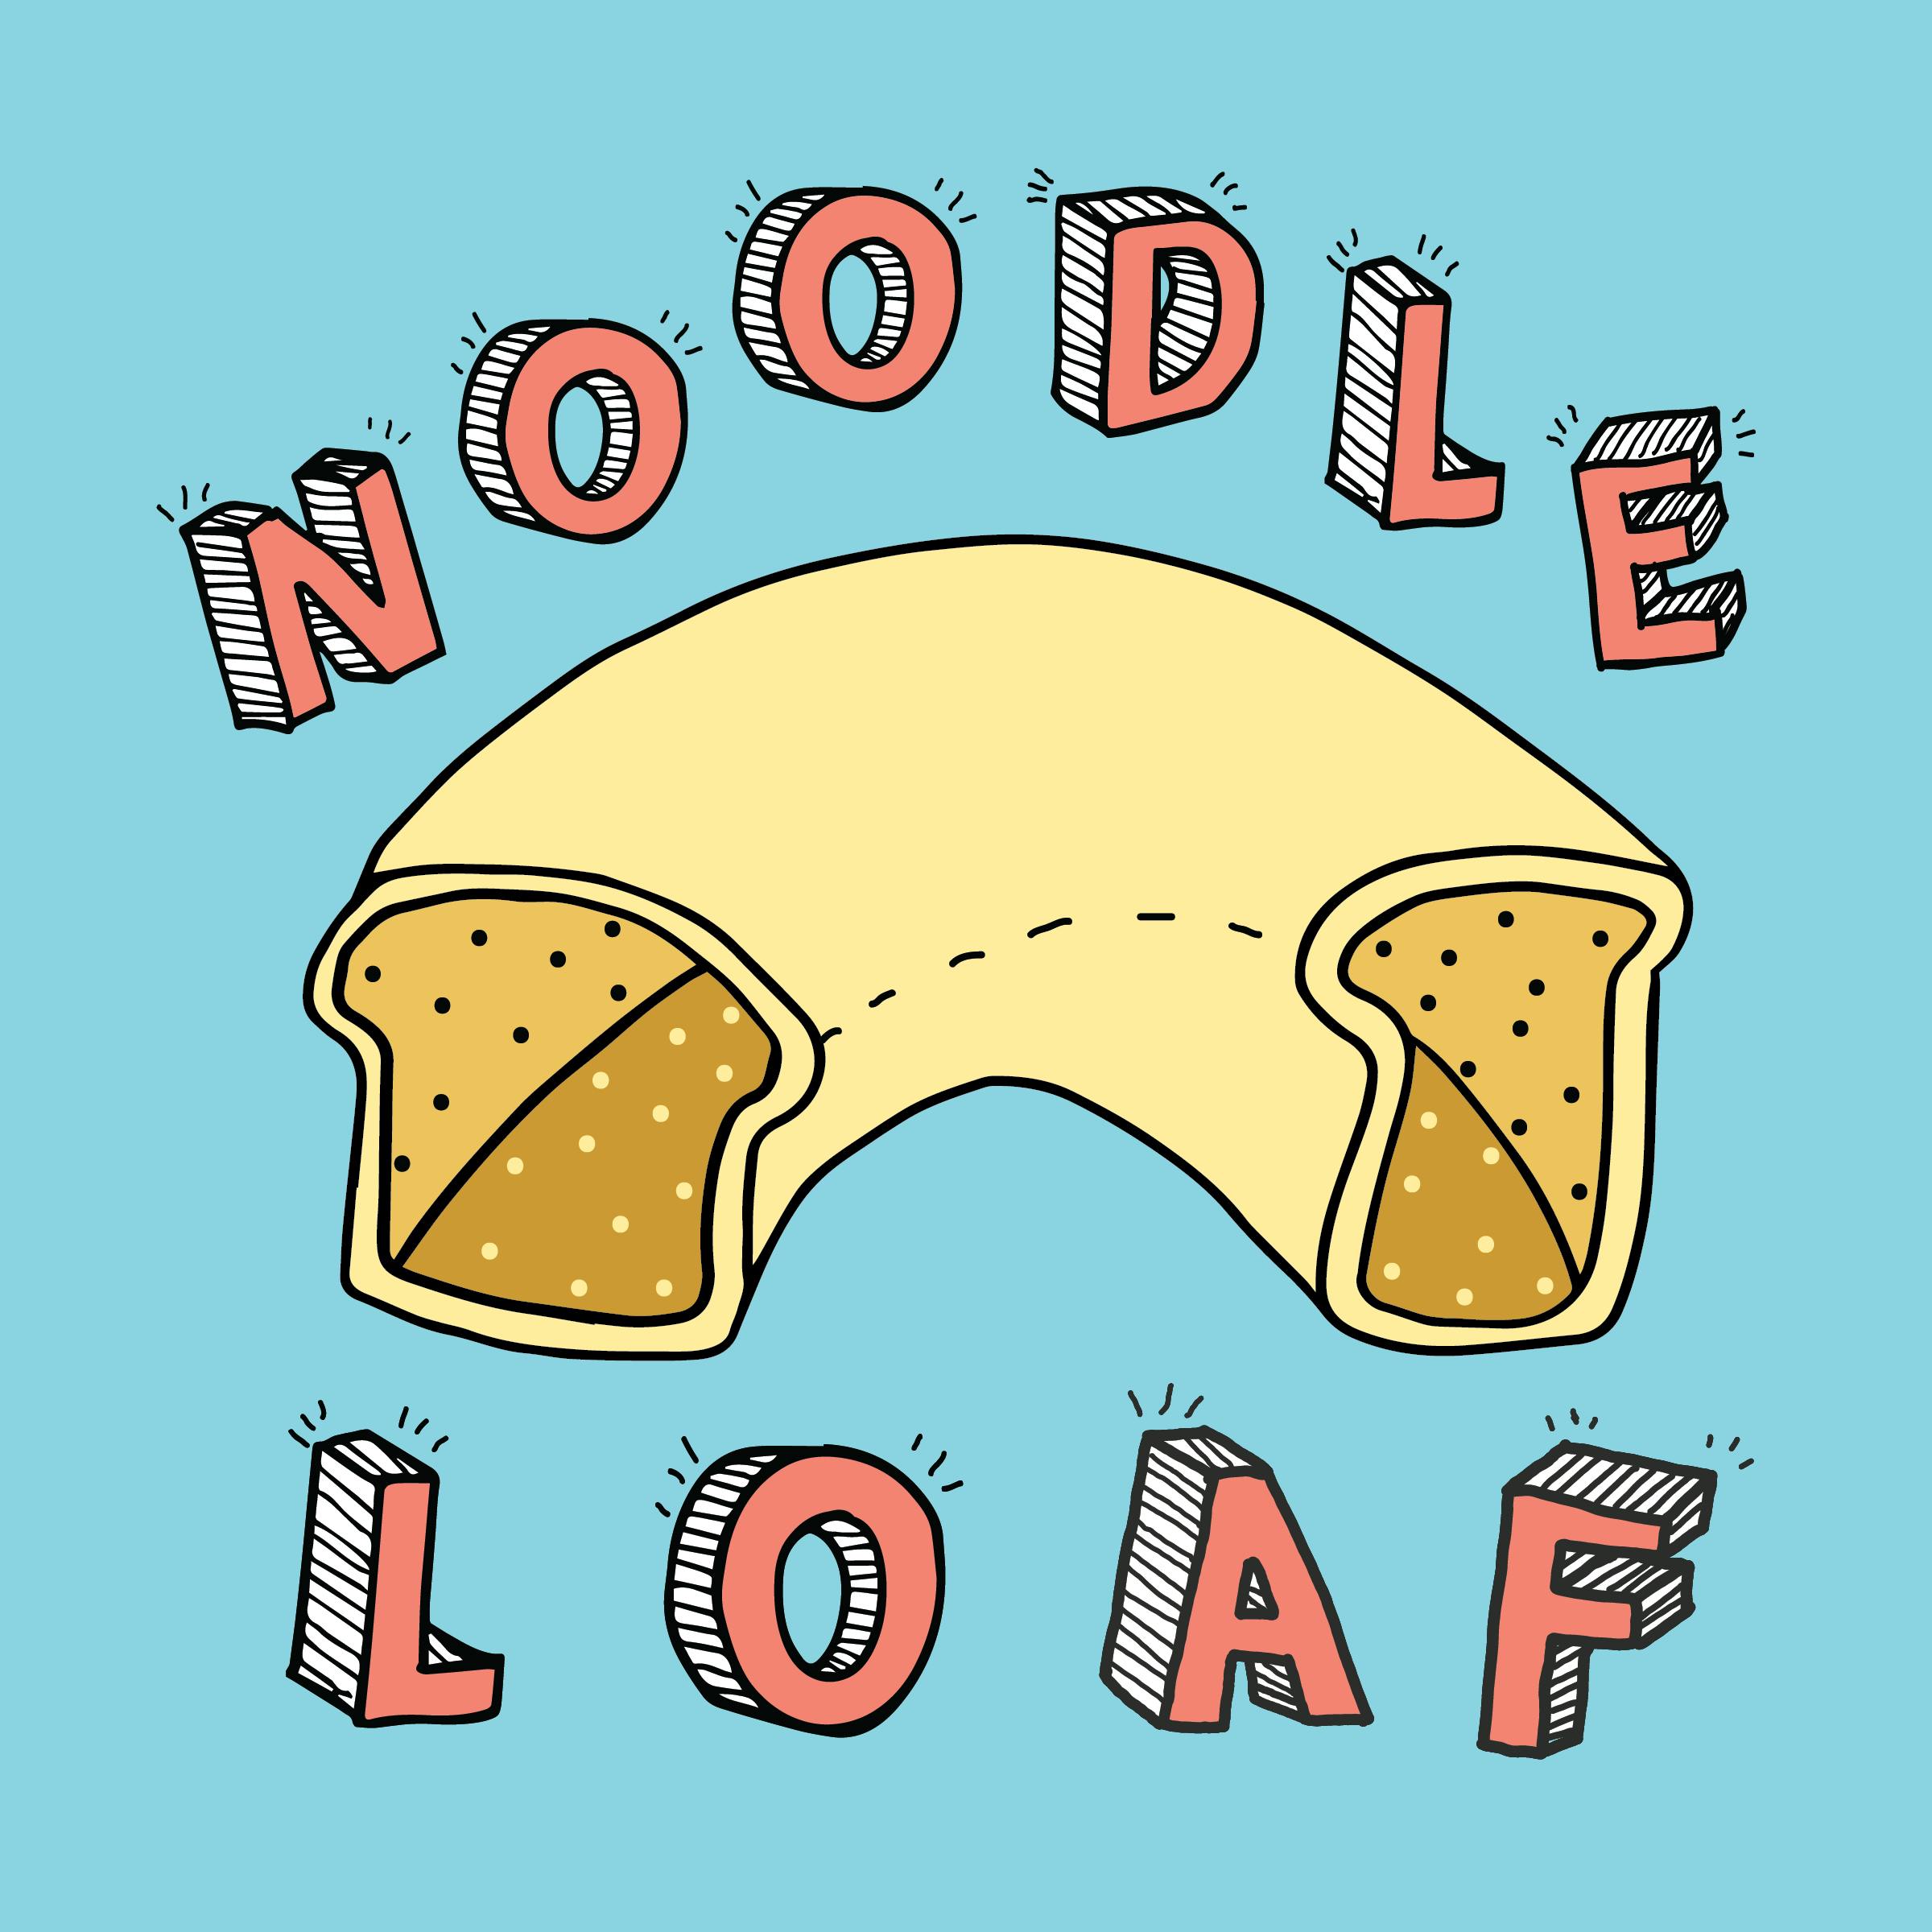 Noodle Loaf - Music Education Podcast for Kids podcast show image